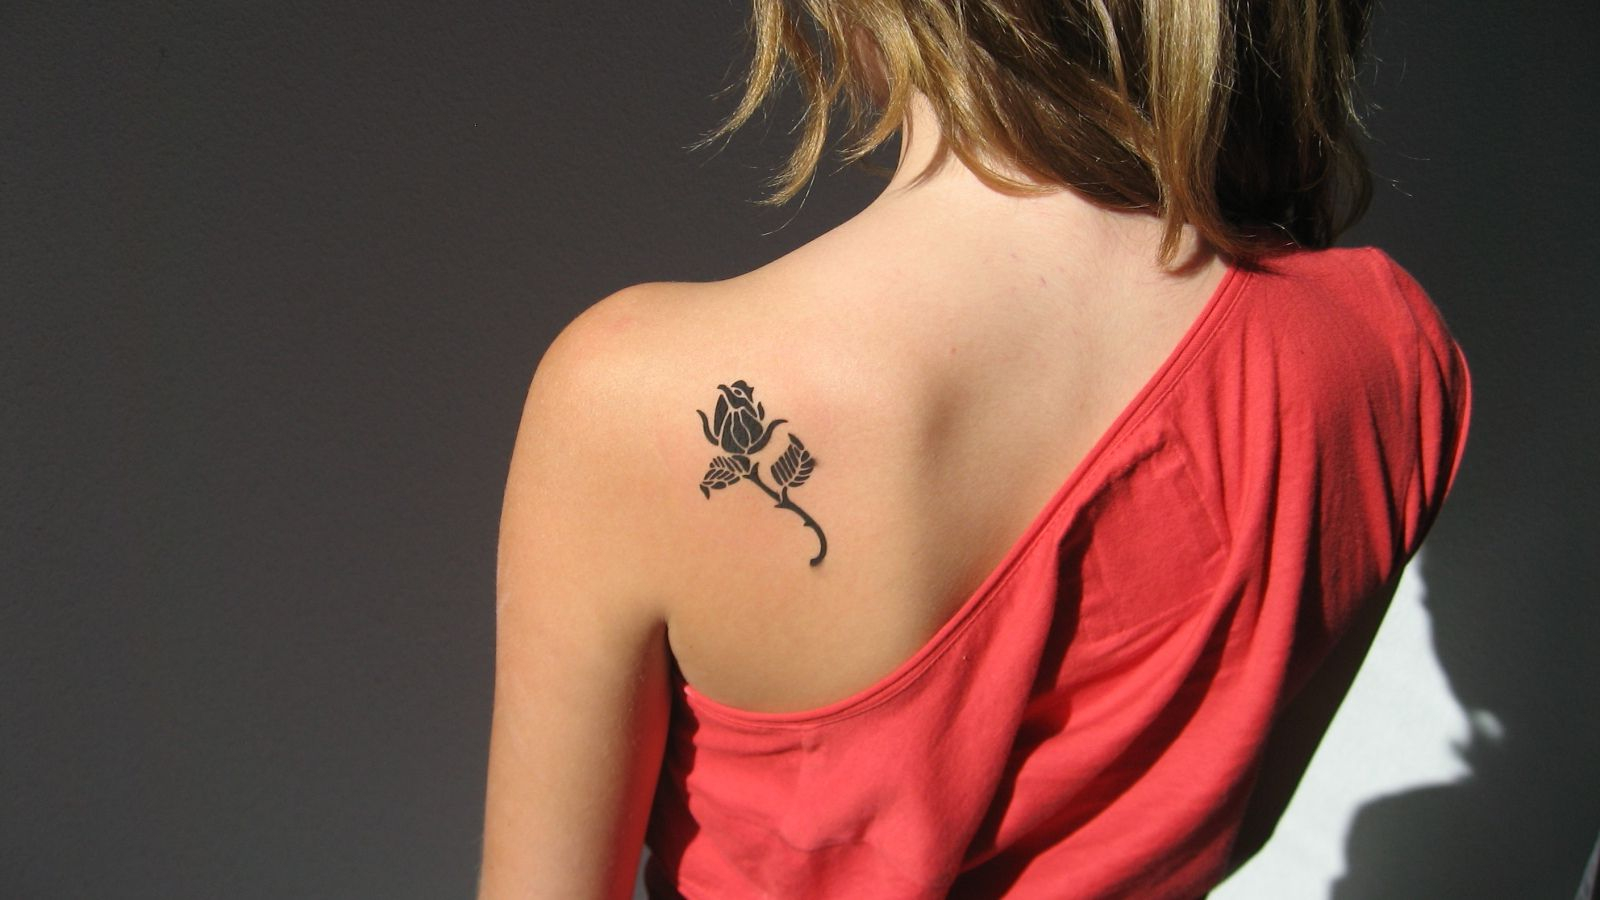 Girl Tattoos On Shoulder Blade 30 Small Cute Tattoos For Girls regarding measurements 1600 X 900